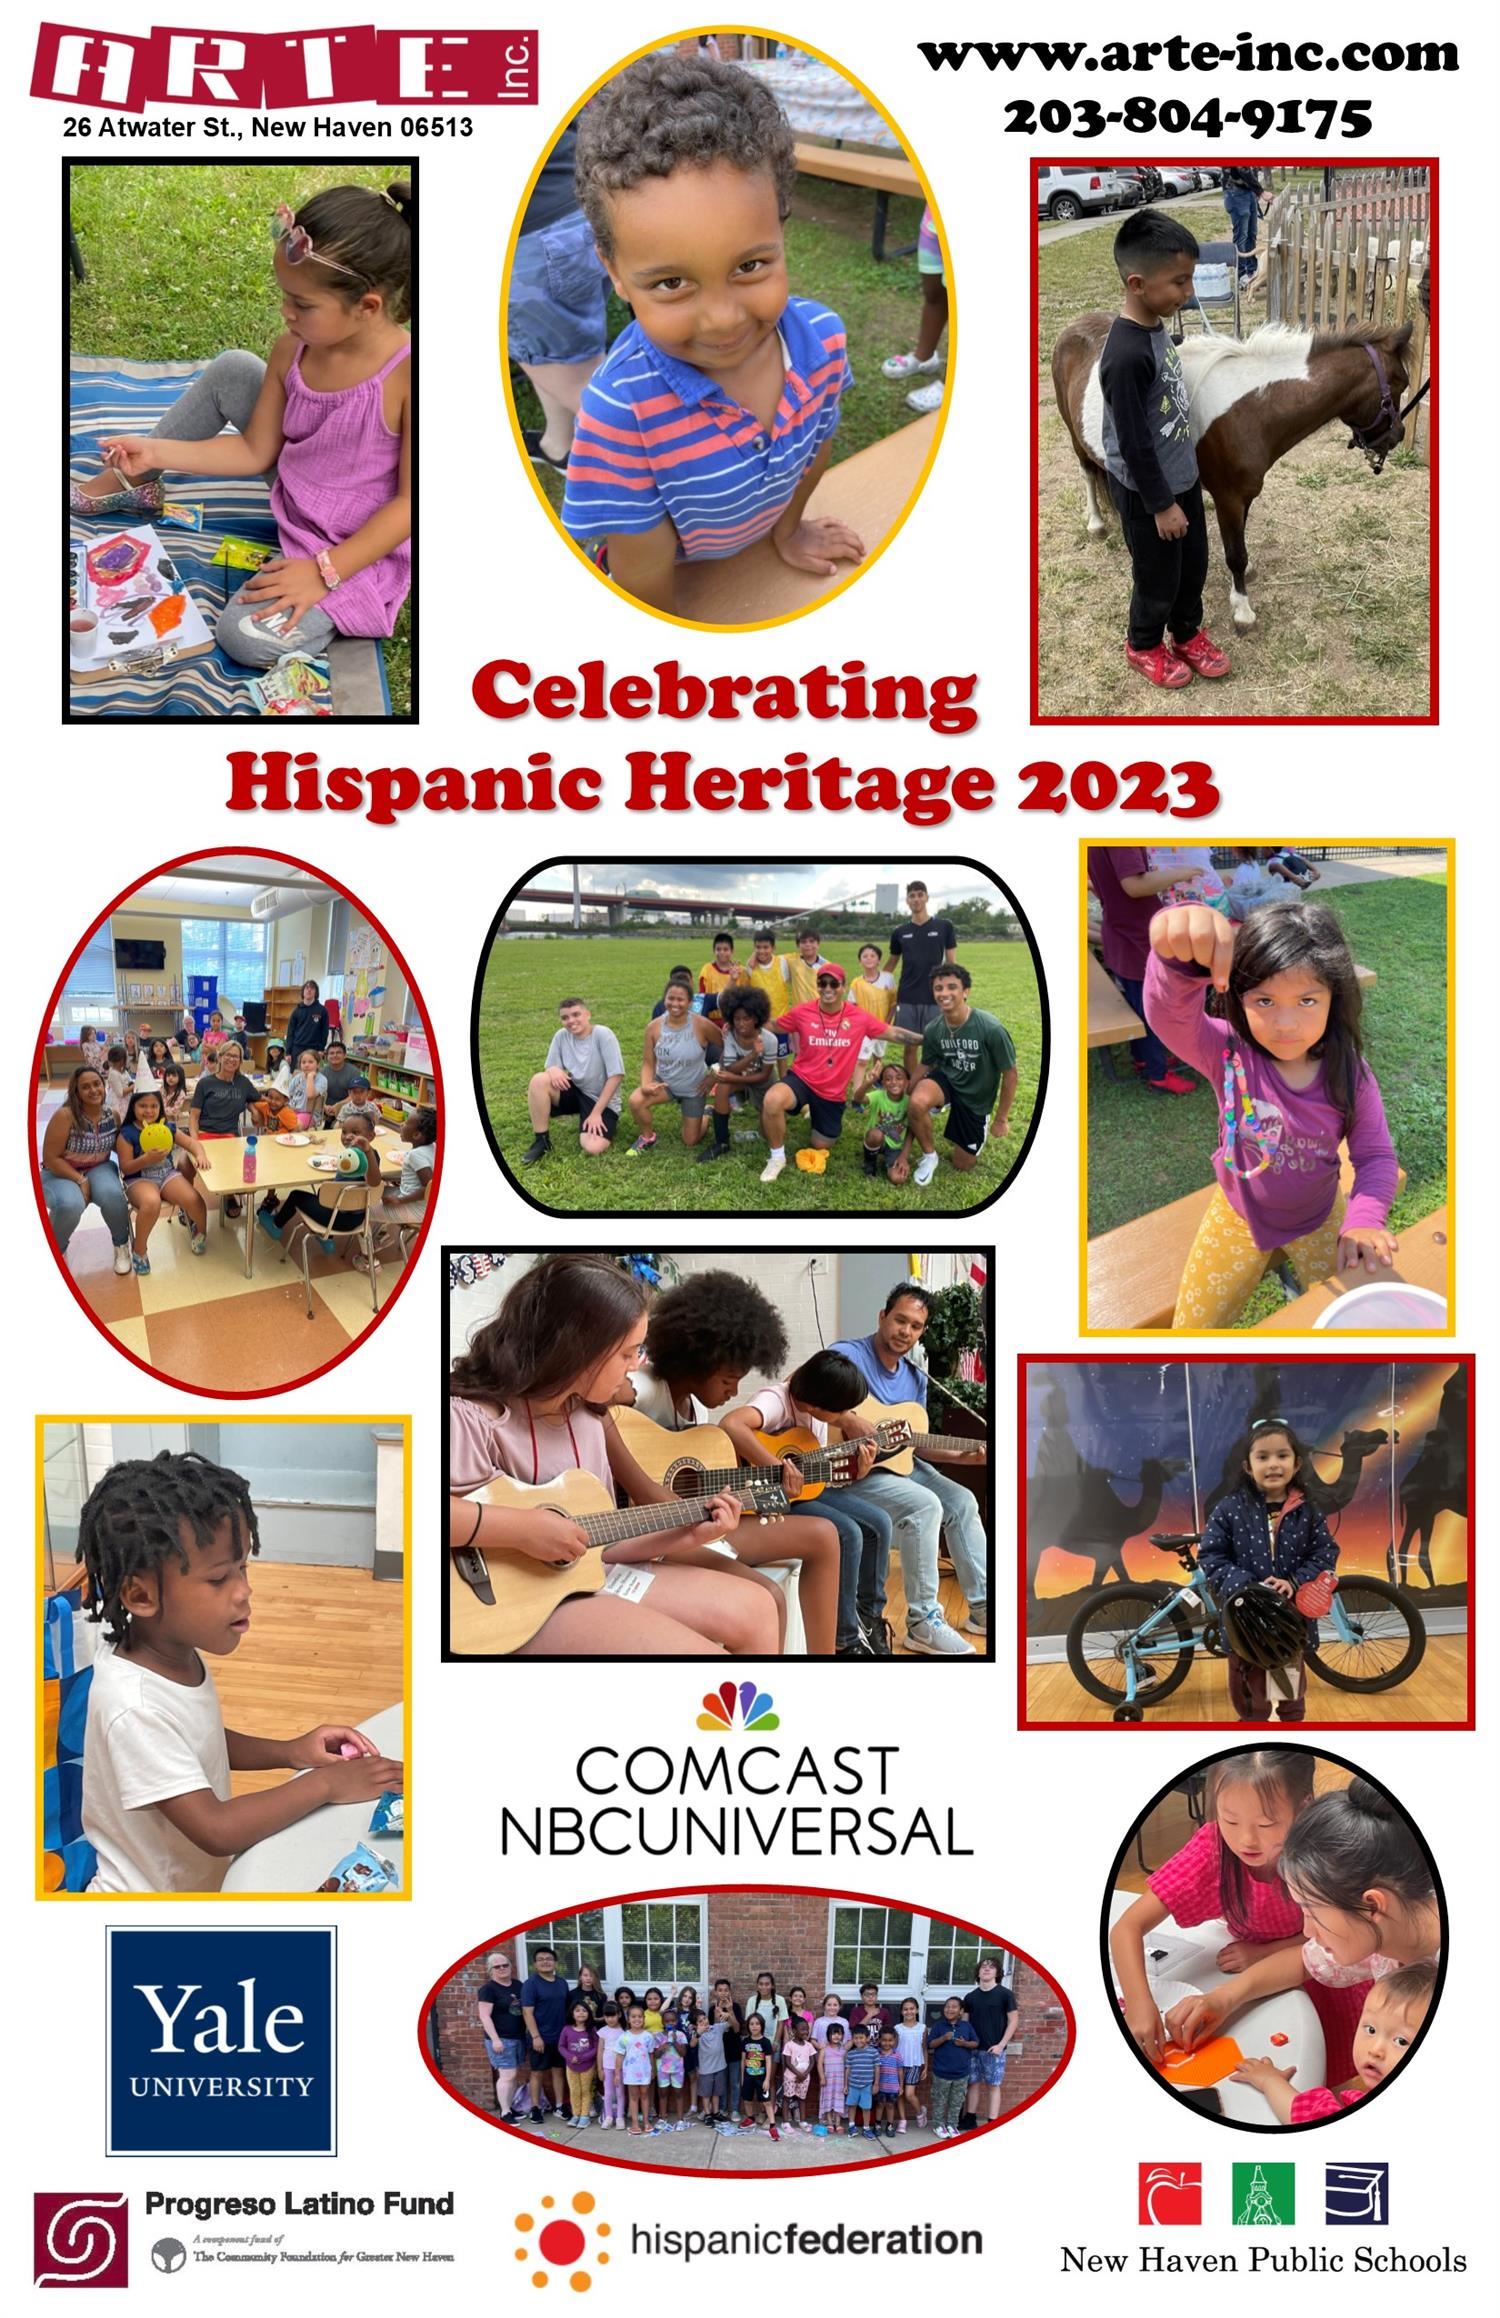 Arte Inc. Celebrating Hispanic Heritage 2023